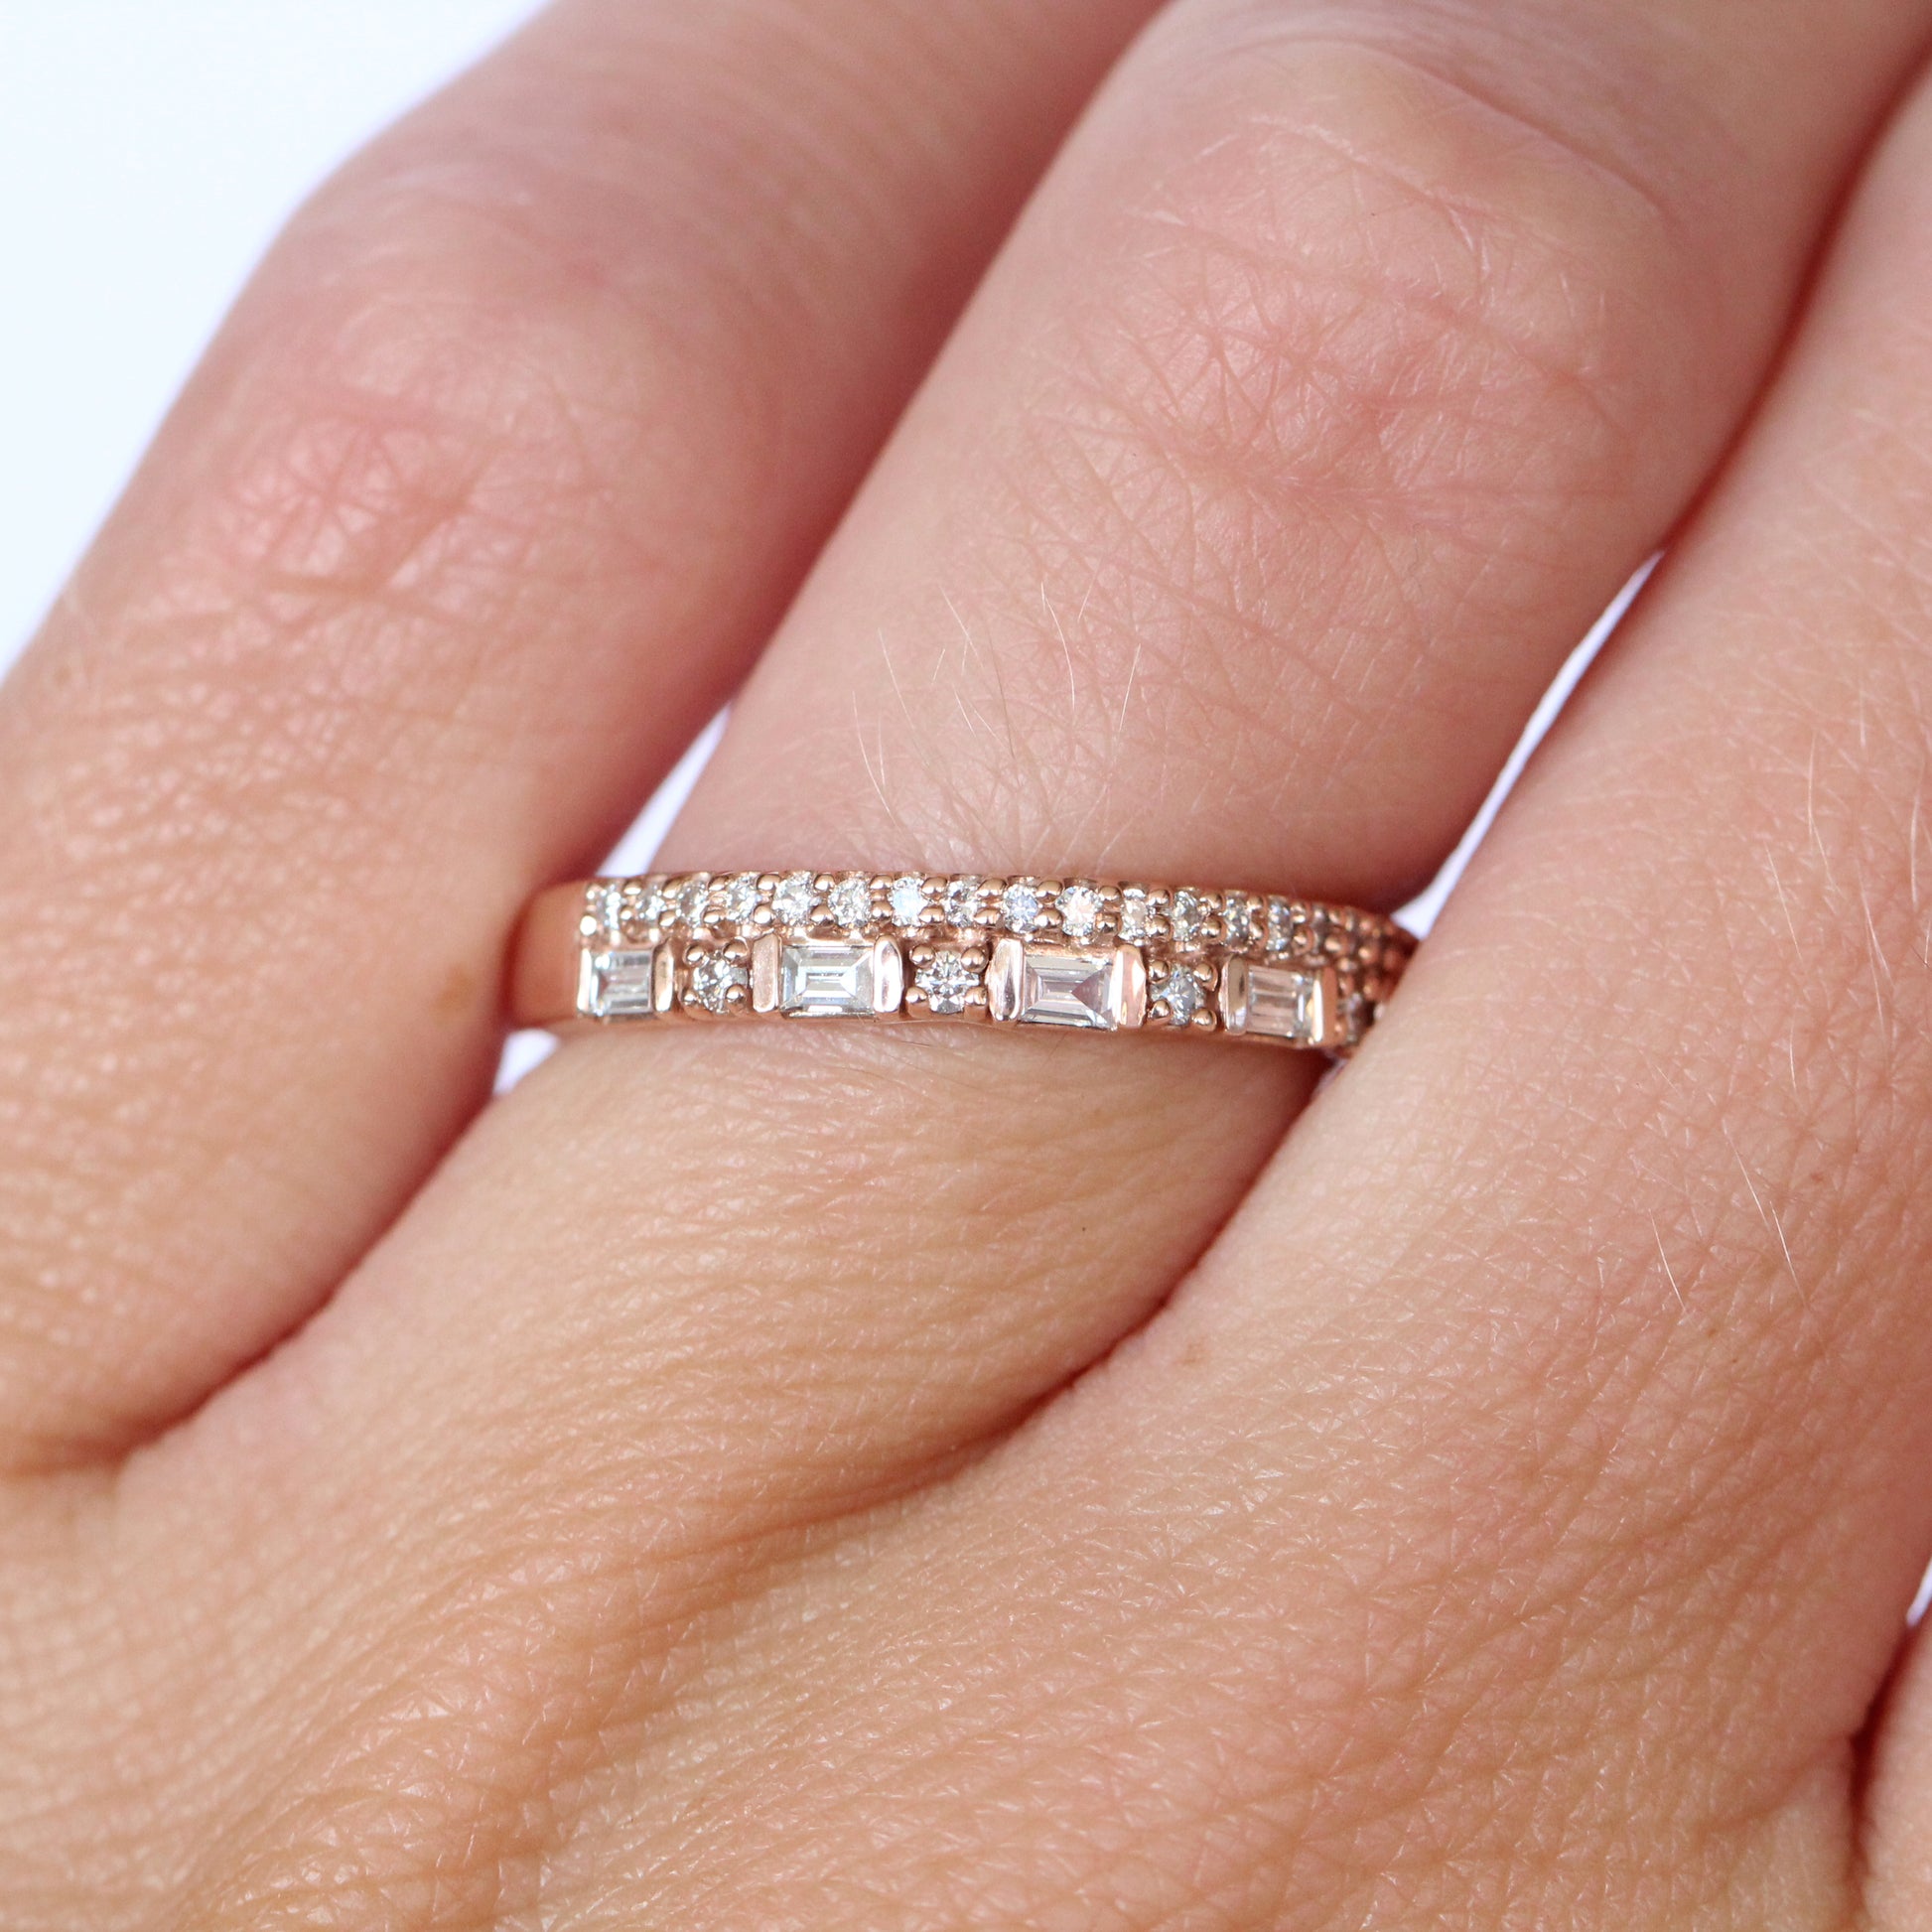 Rosalind Diamond Engagement Ring Band - White diamonds - Midwinter Co. Alternative Bridal Rings and Modern Fine Jewelry